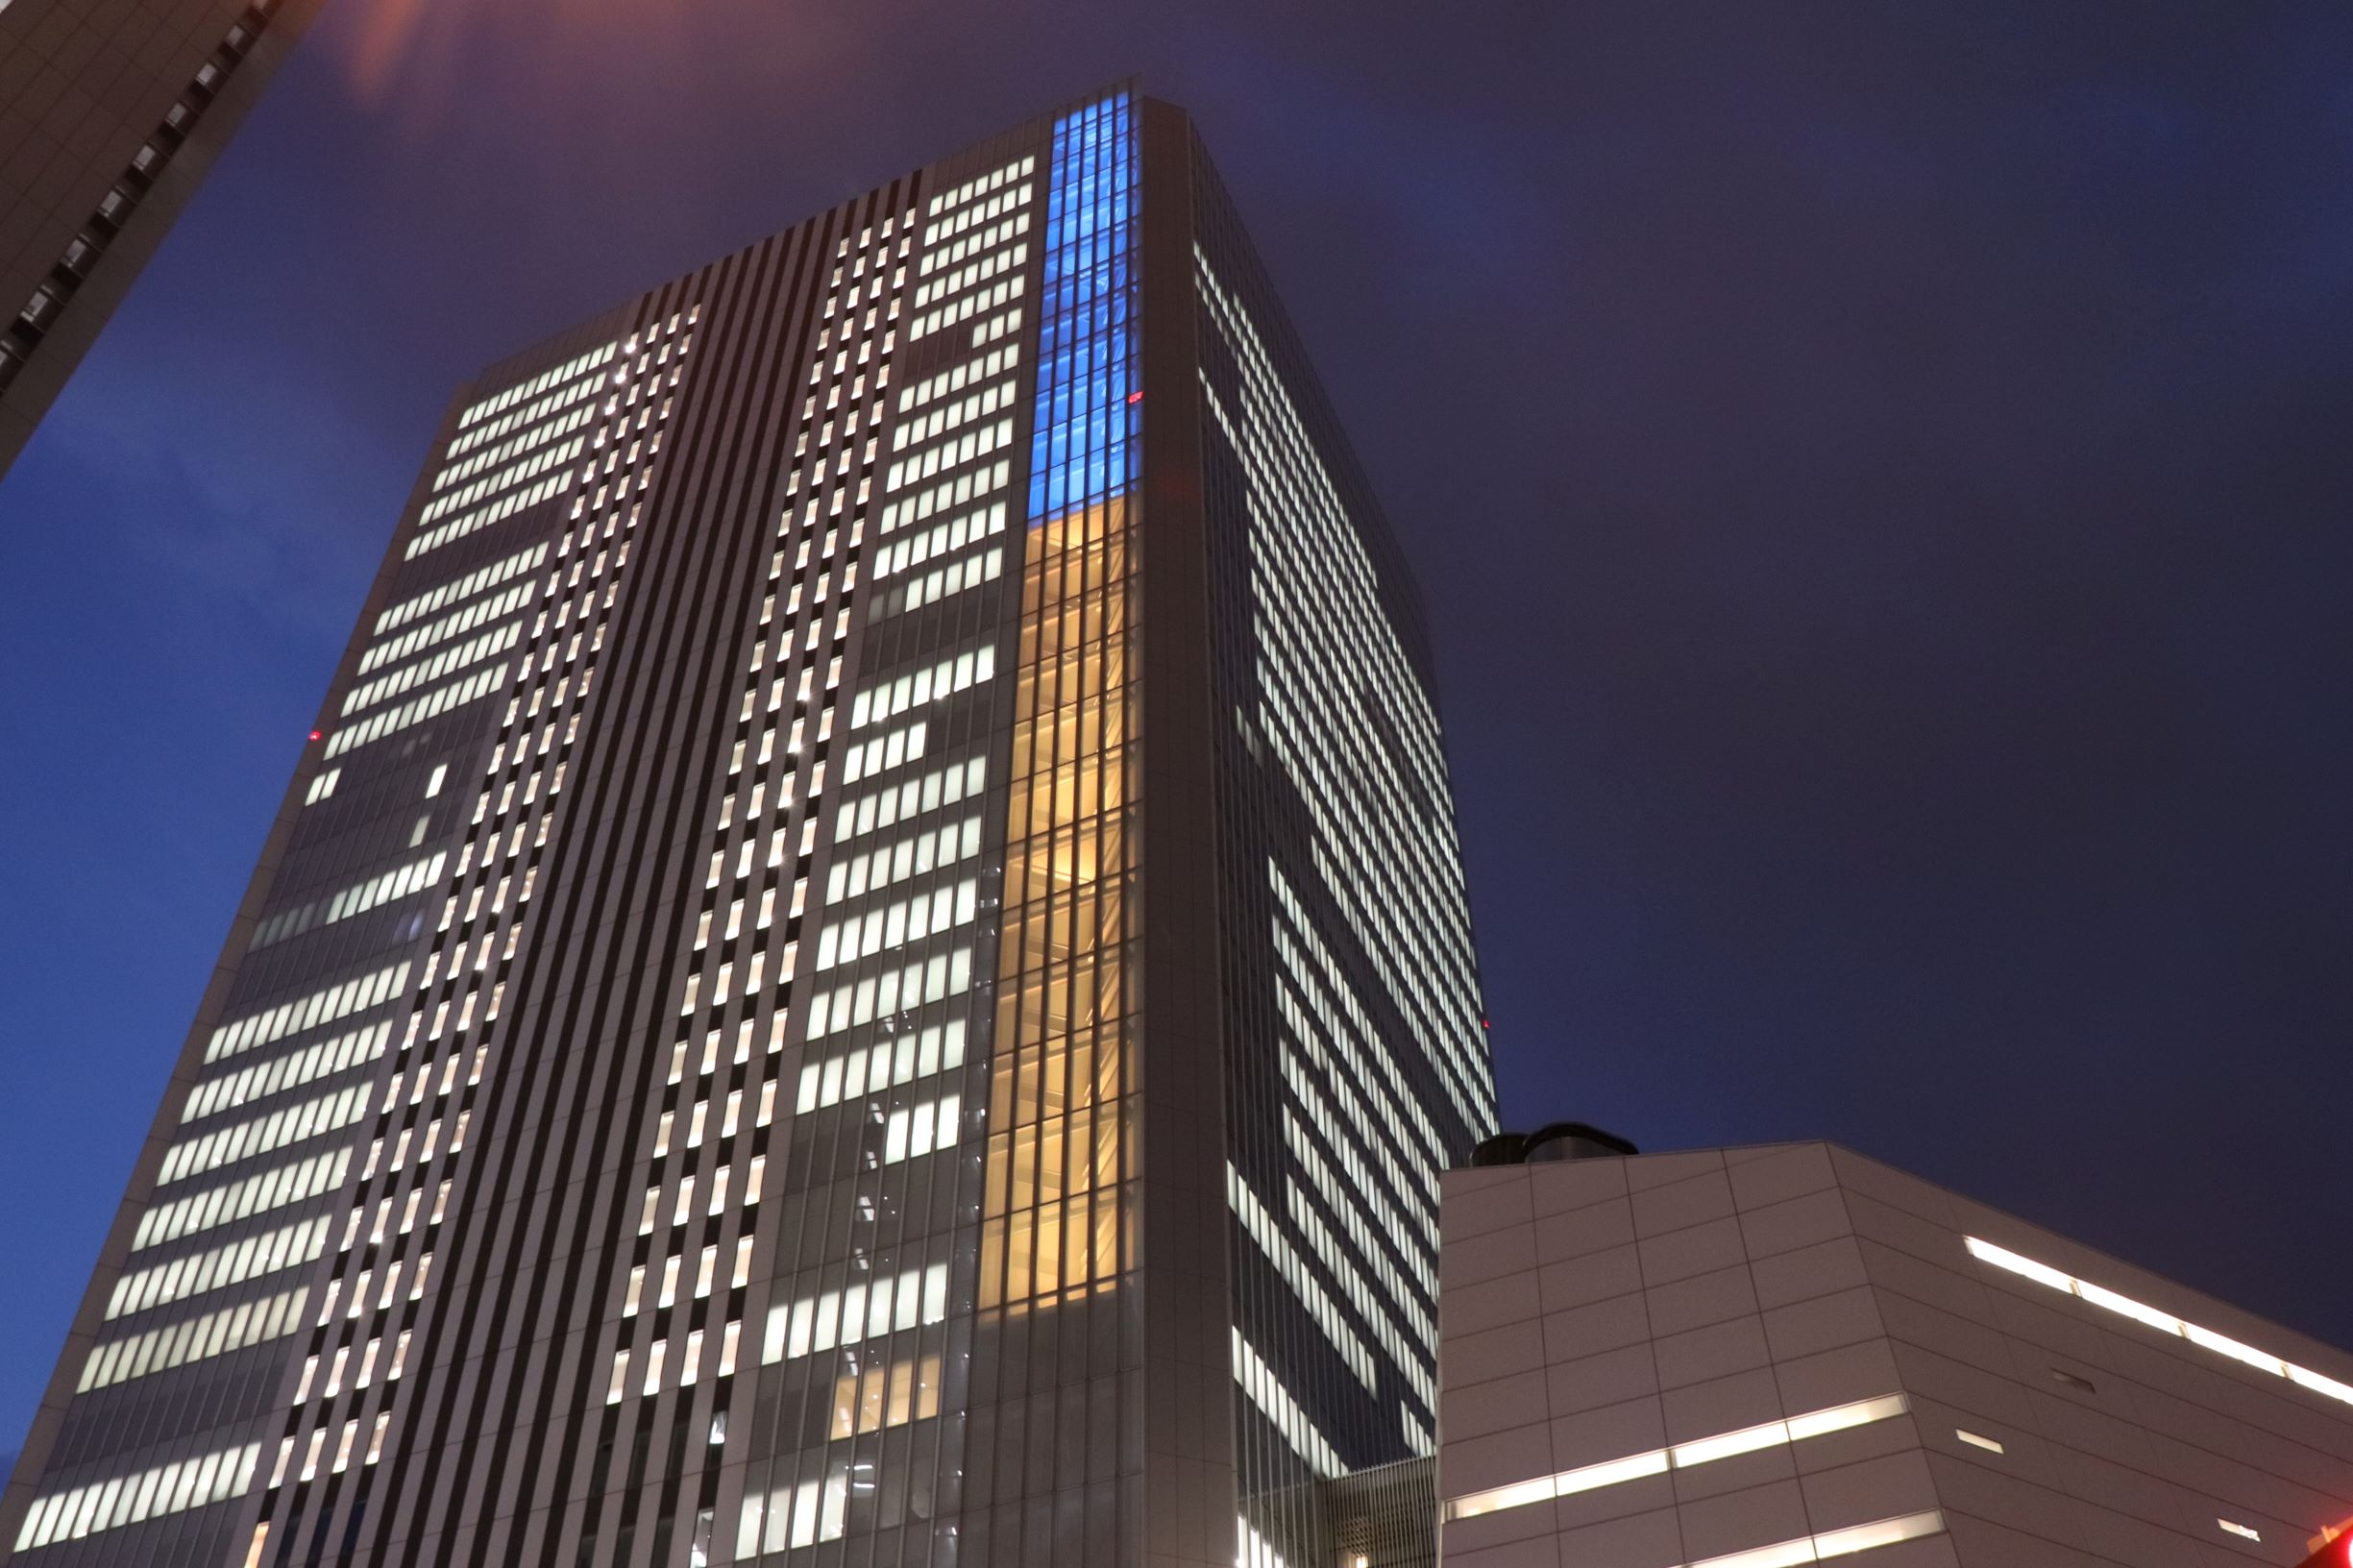 Yokohama, Japan City Hall illuminated in the colors of the Ukrainian flag